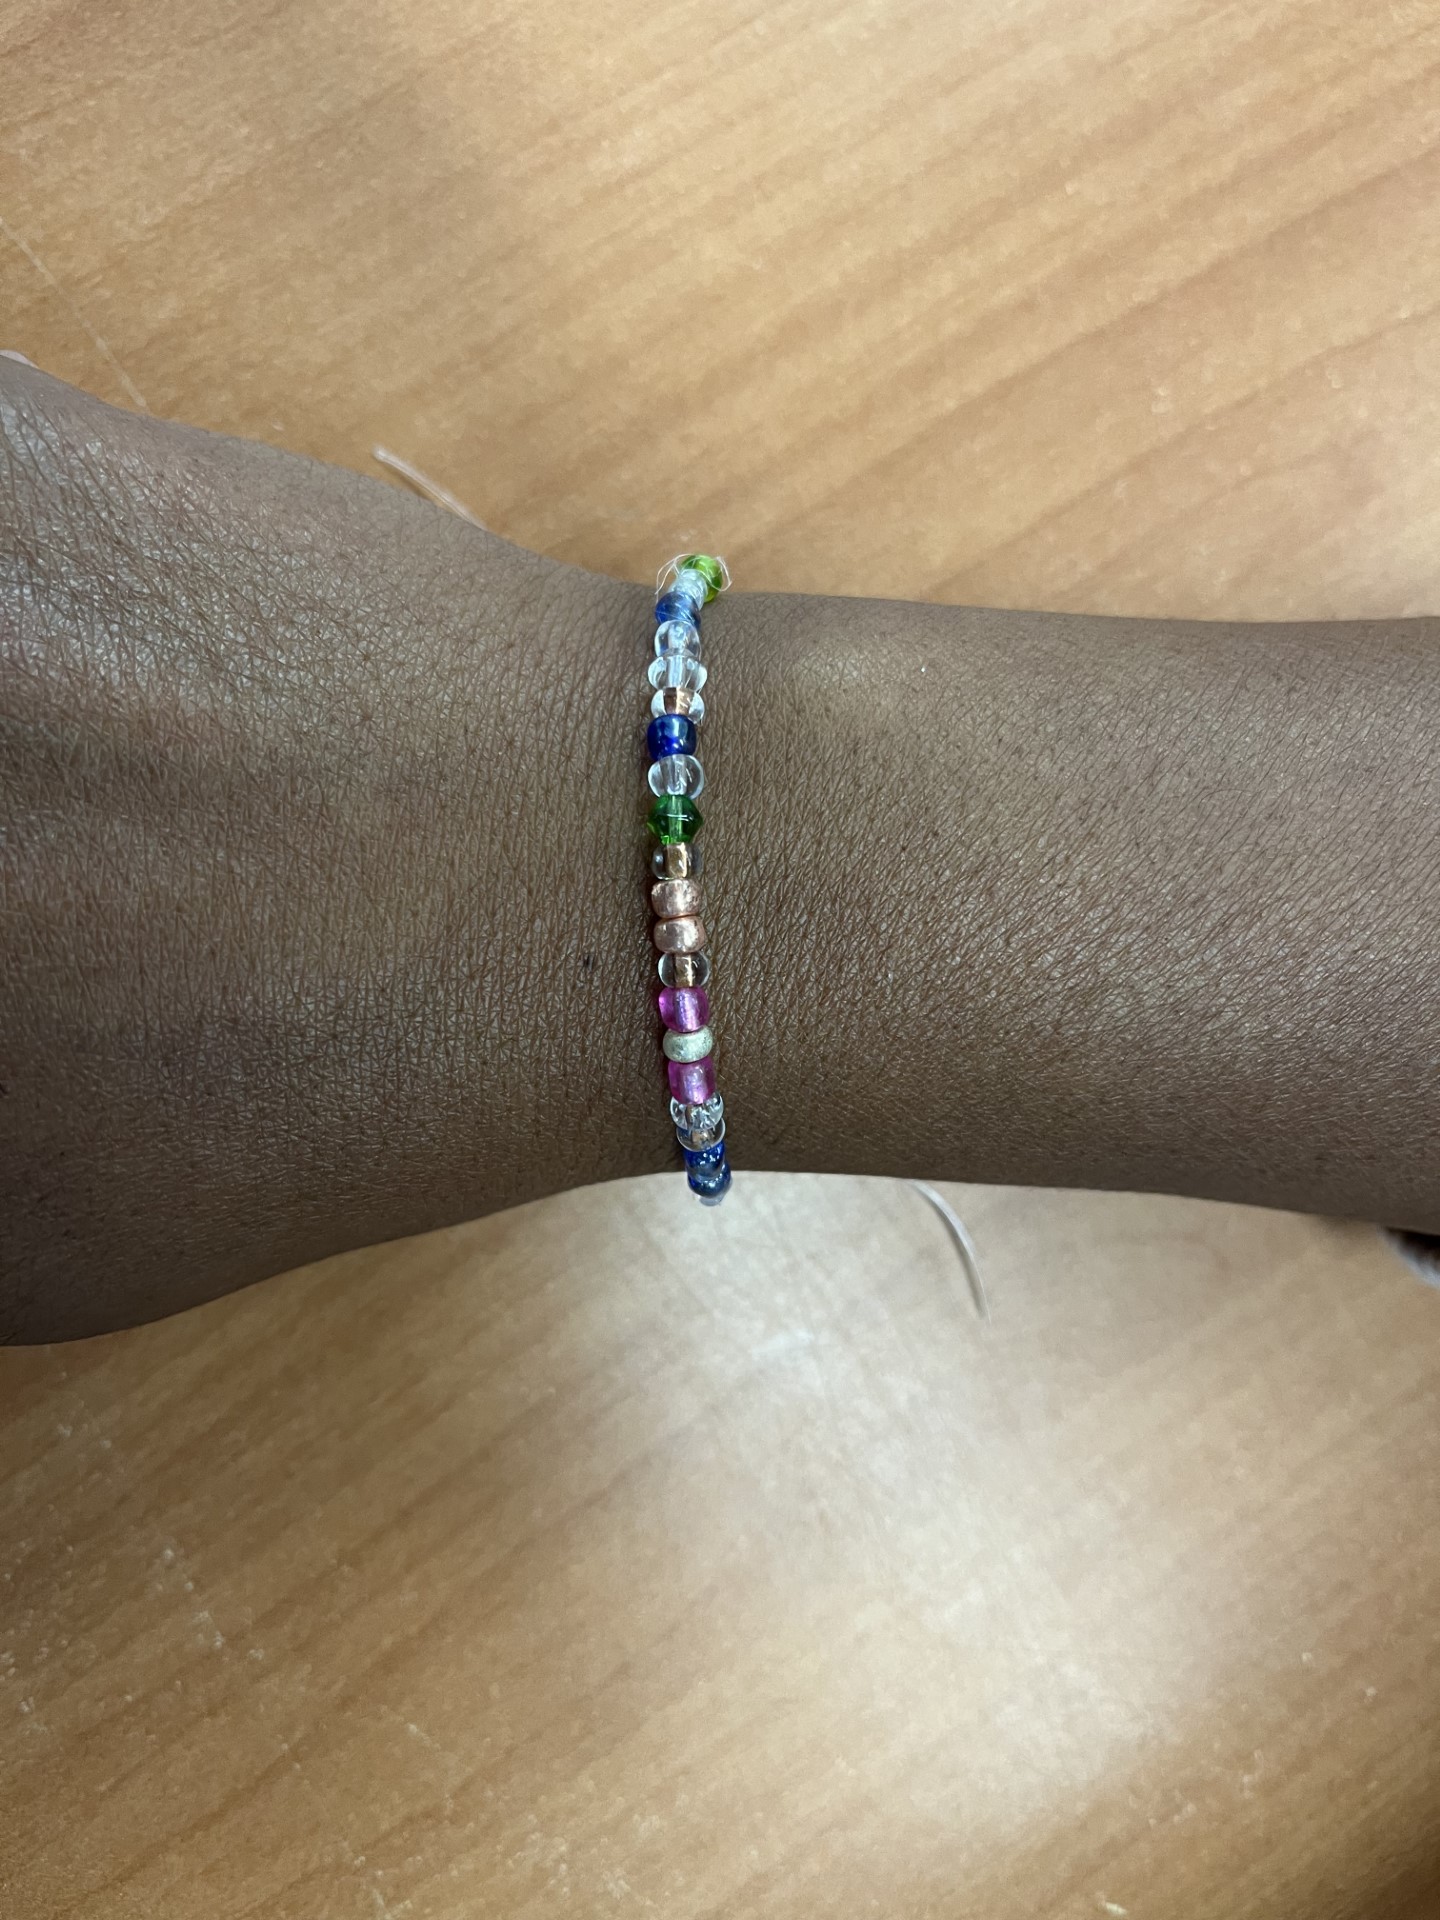 Wrist with a Morse code bead bracelet on it